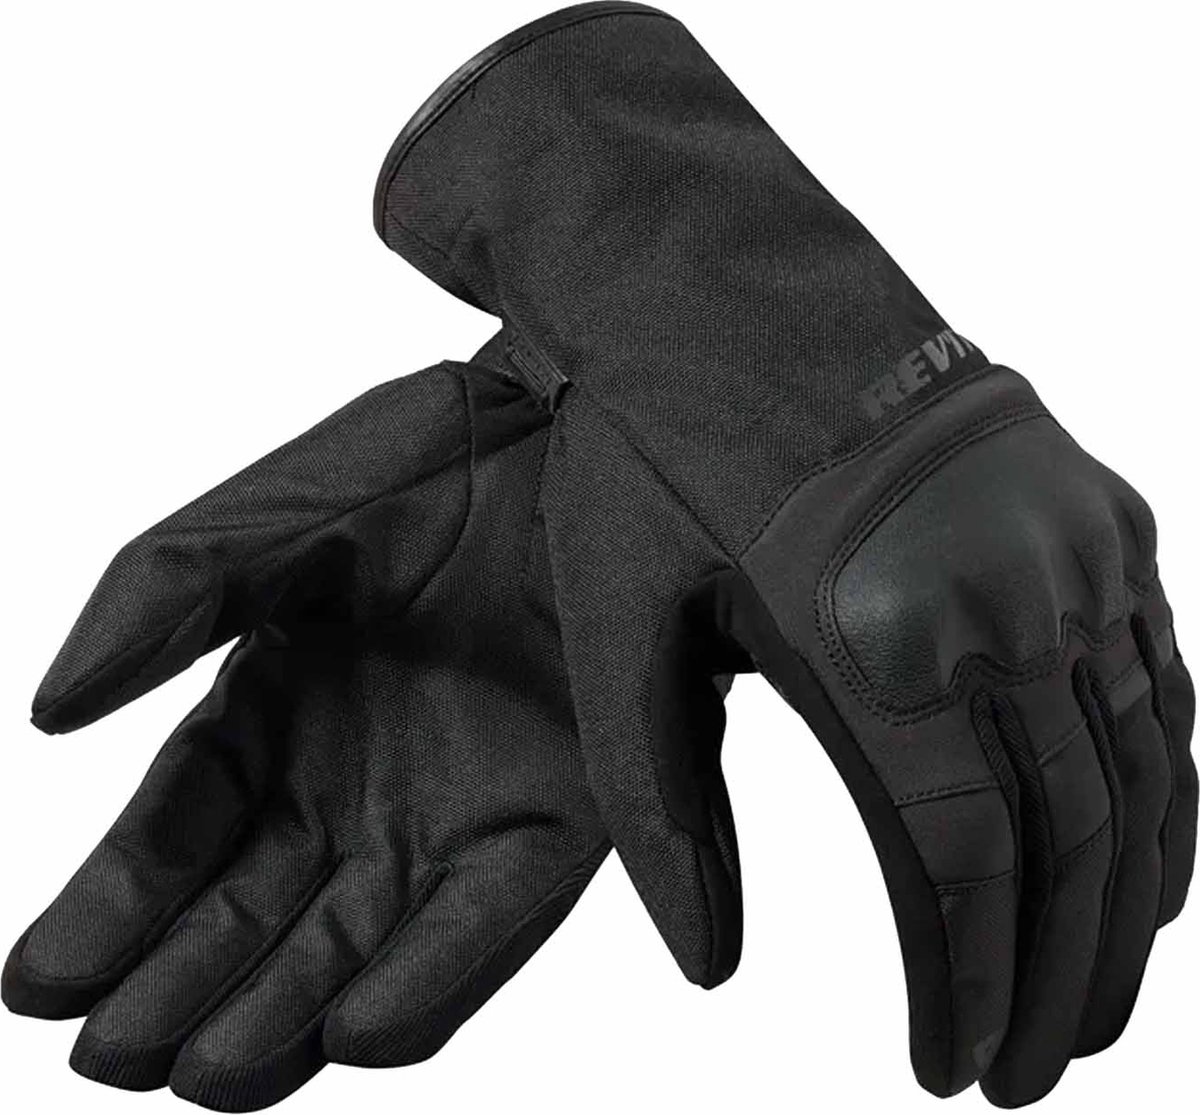 REV'IT! Gloves Croydon H2O Black XL - Maat XL - Handschoen